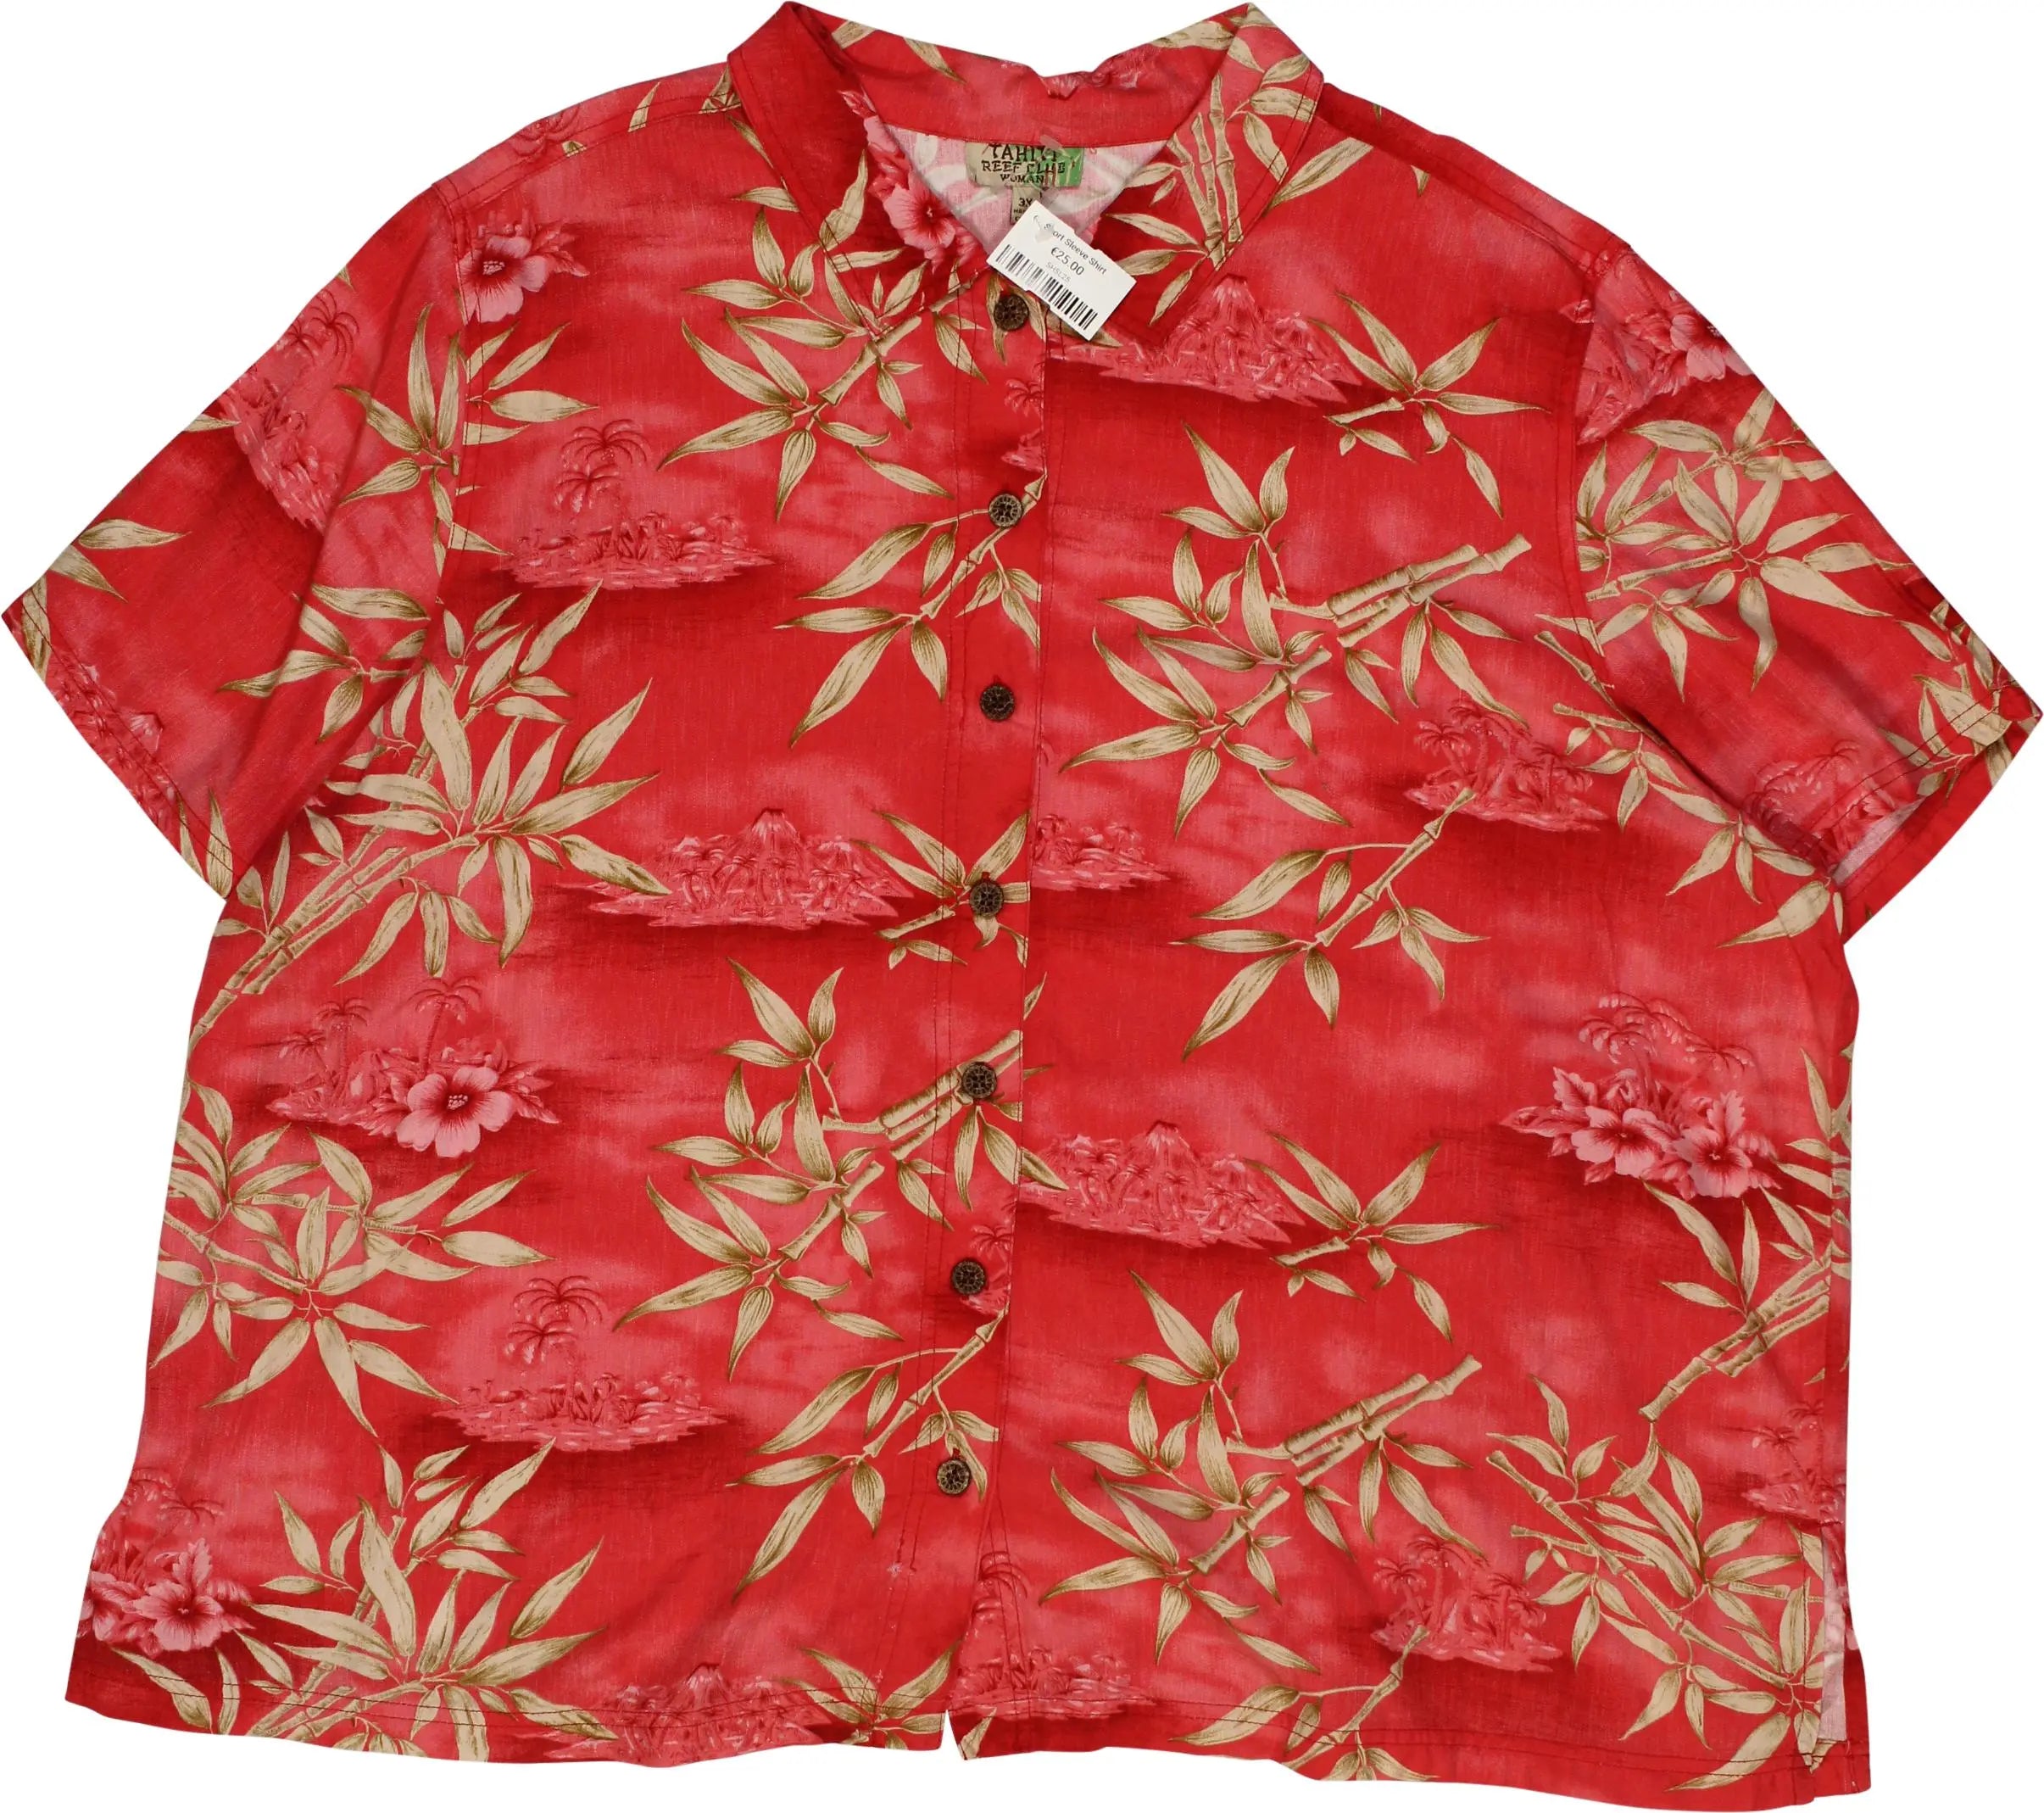 Tahiti Reef Club - Hawaiian Shirt- ThriftTale.com - Vintage and second handclothing